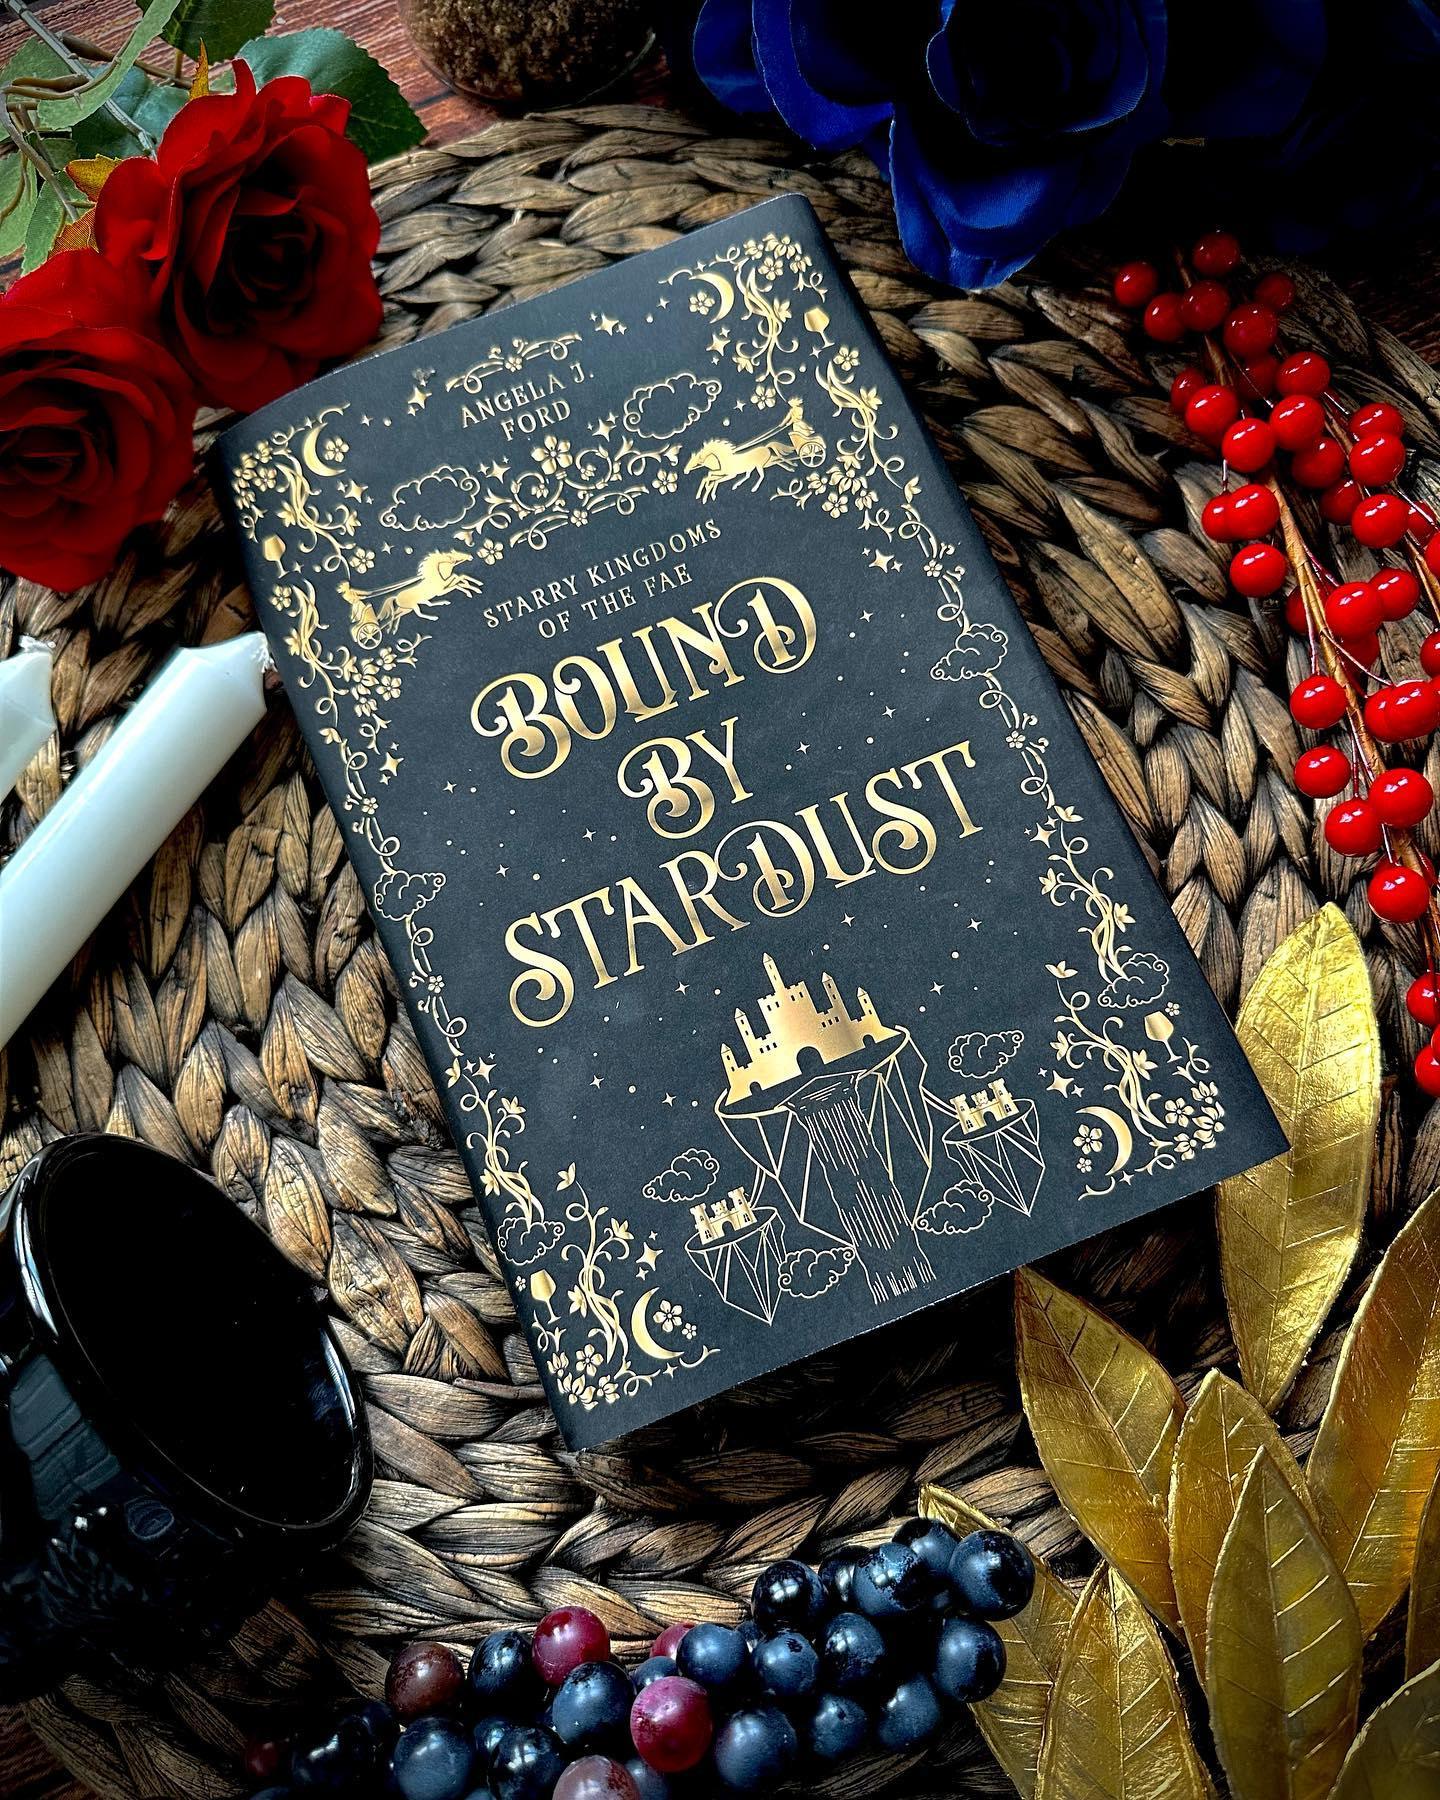 Bound by Stardust - Angela J. Ford | Fantasy Author